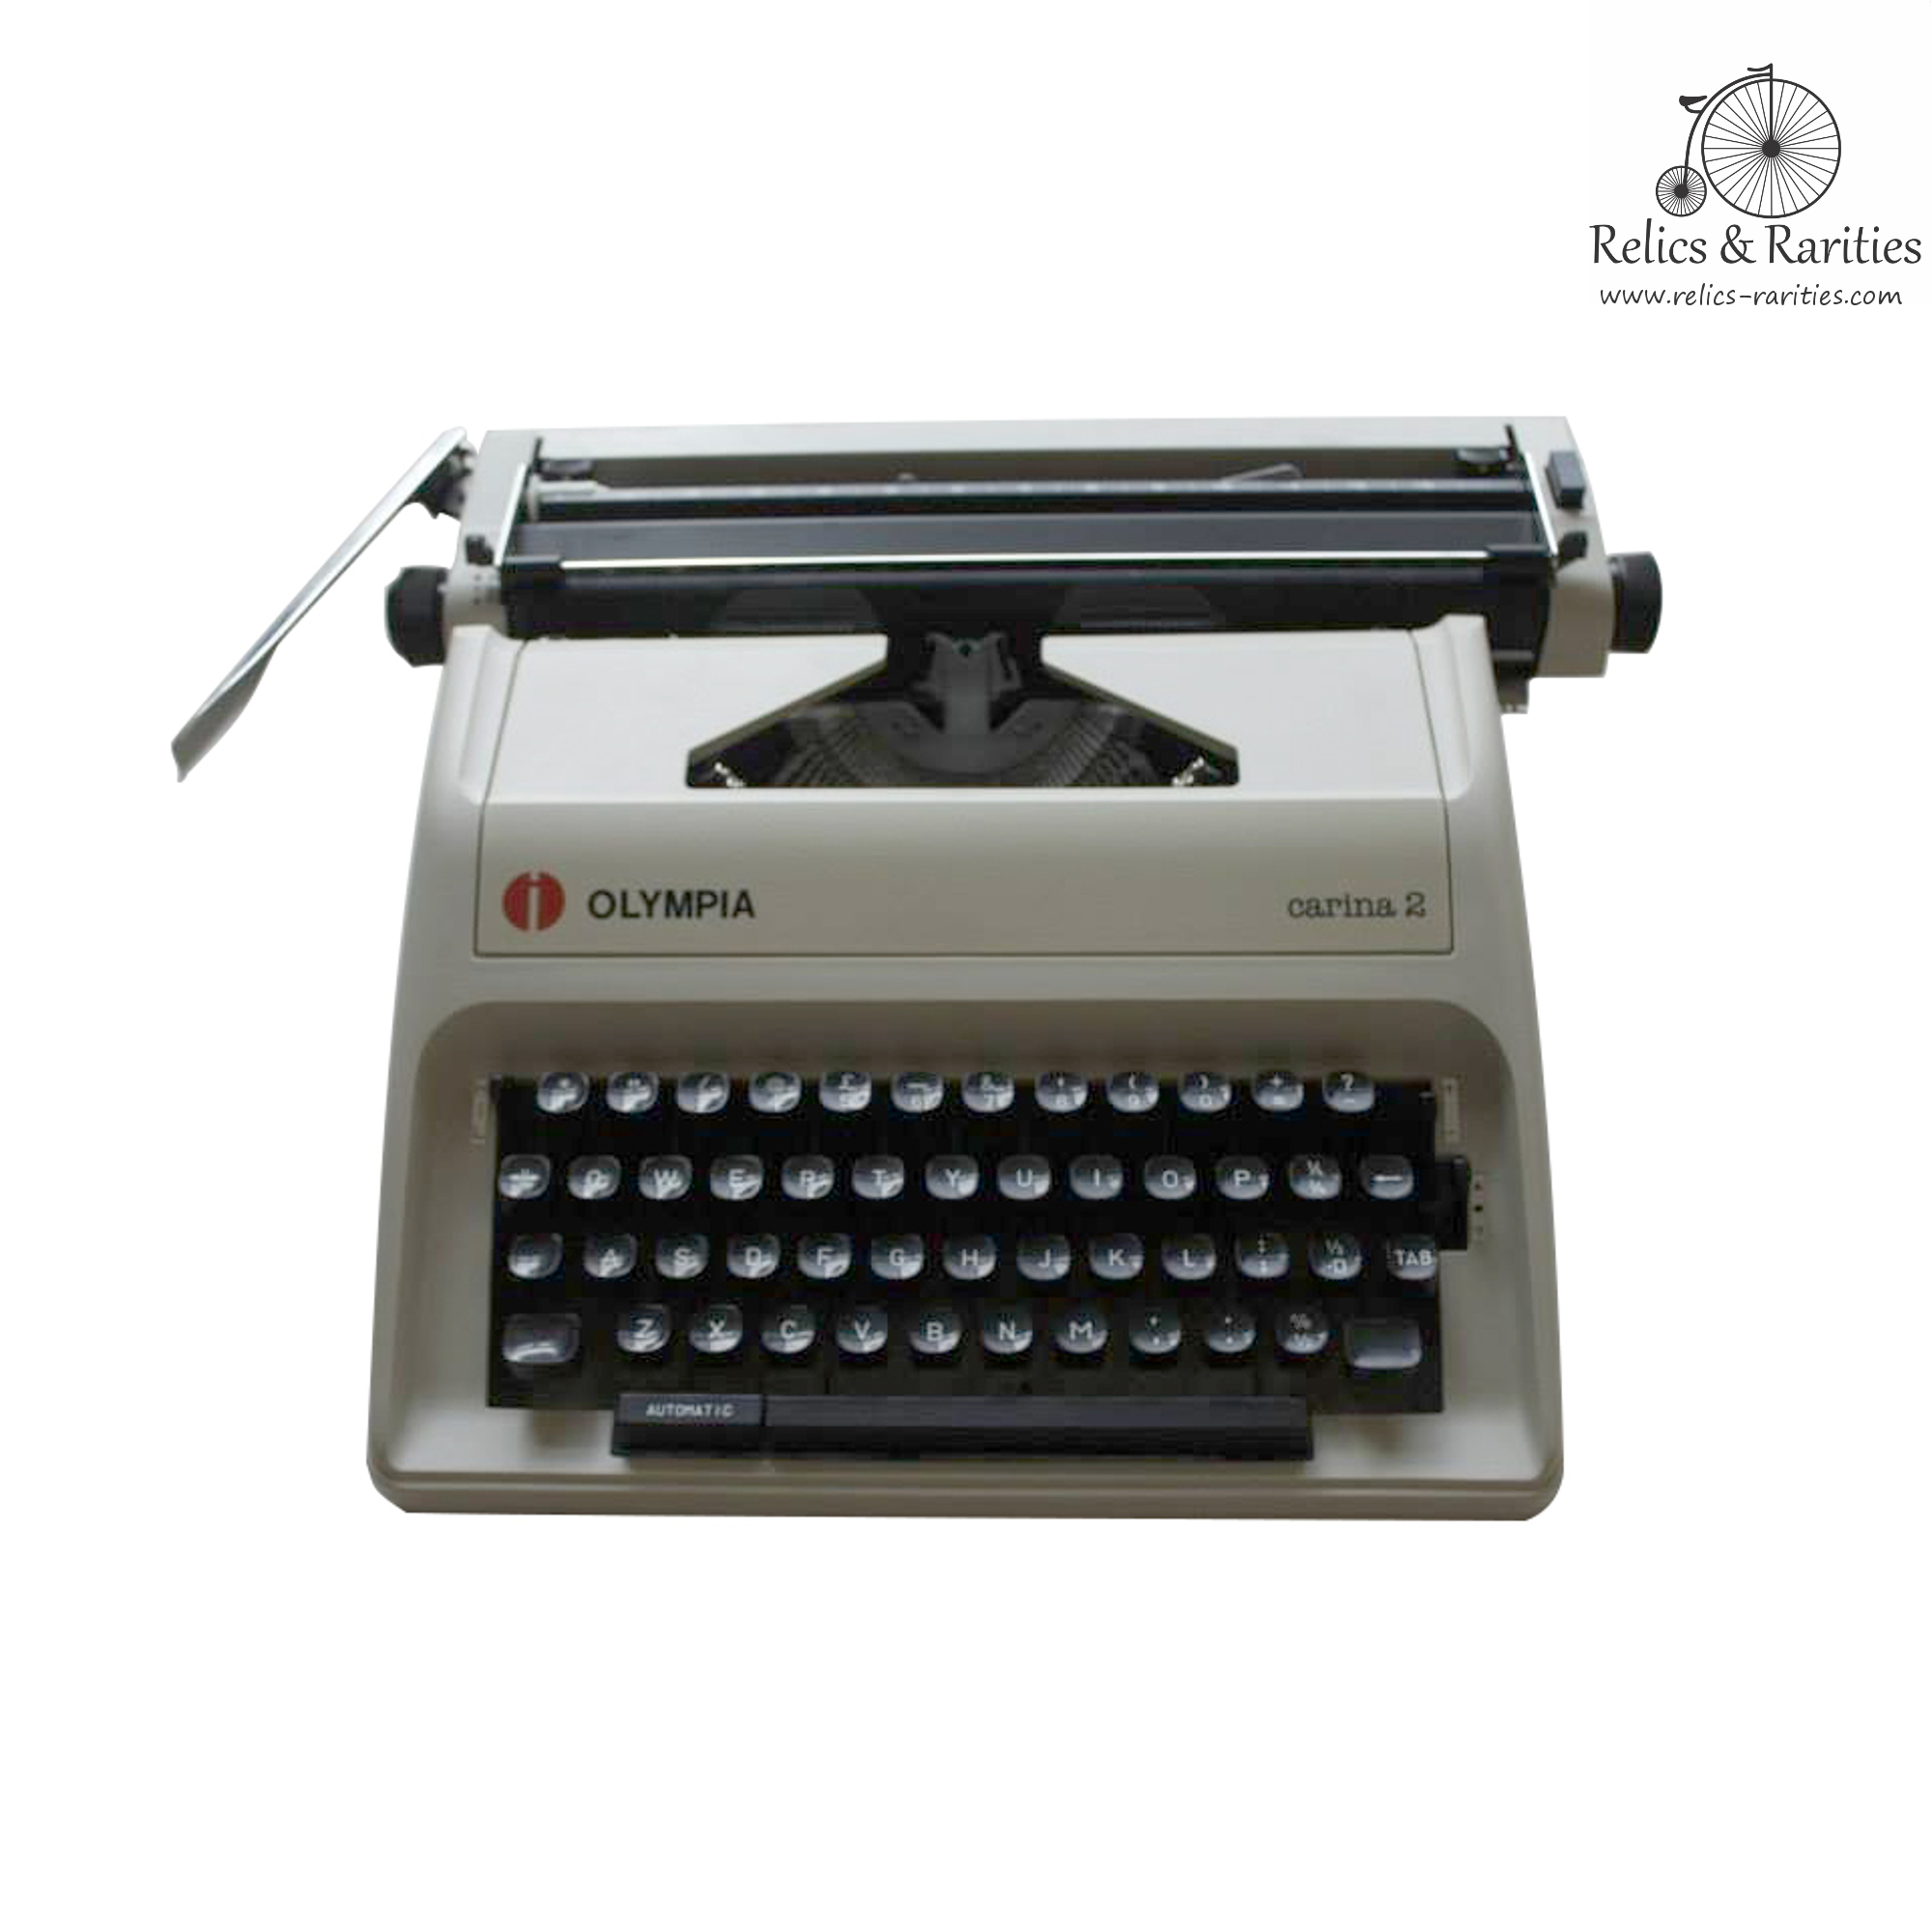 Olympia Carina 2 Ribbon Typewriter - Relics and Rarities